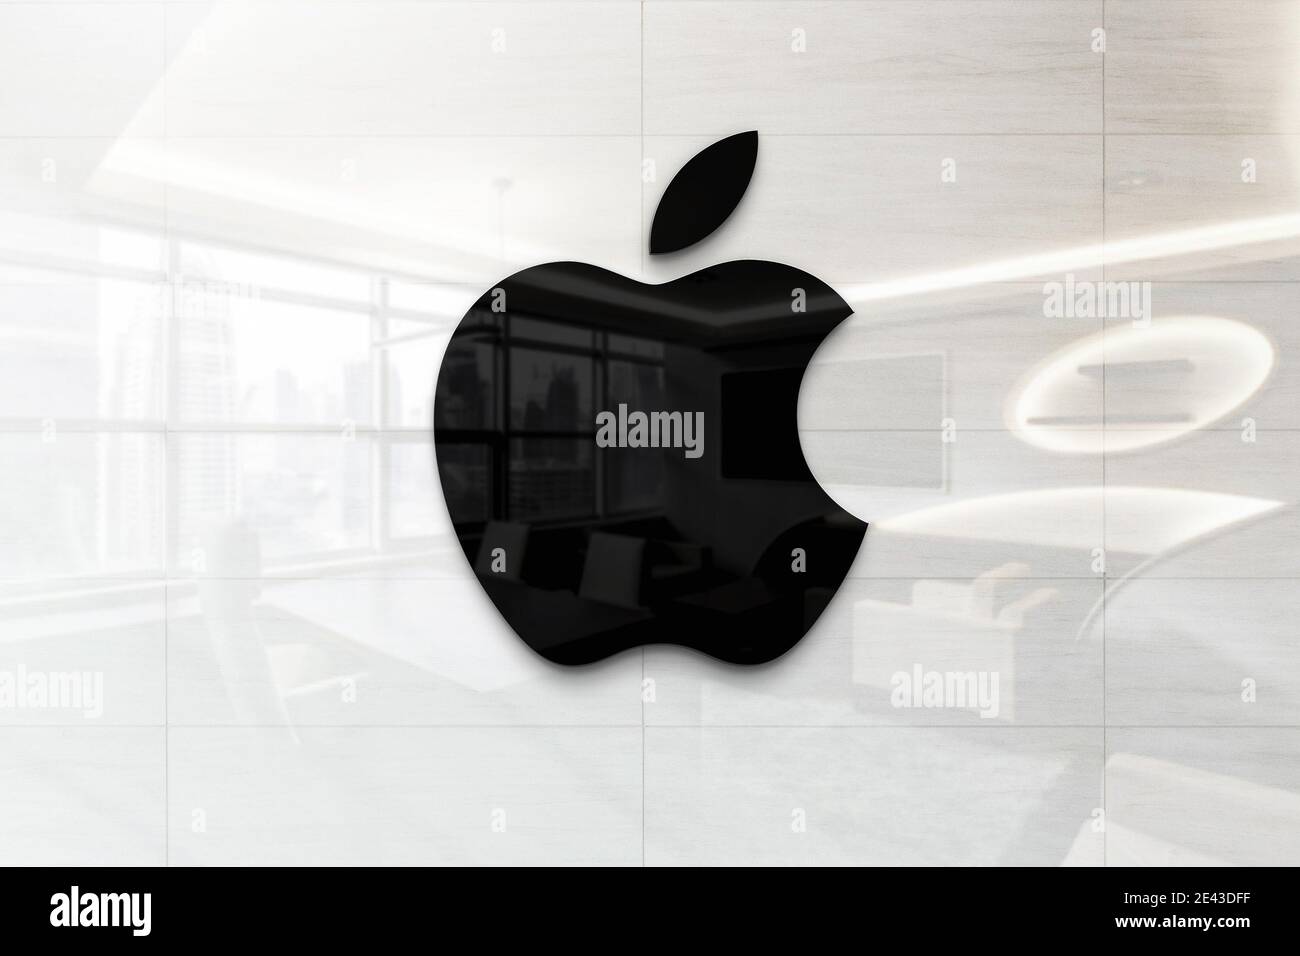 apple logo on wall Stock Photo